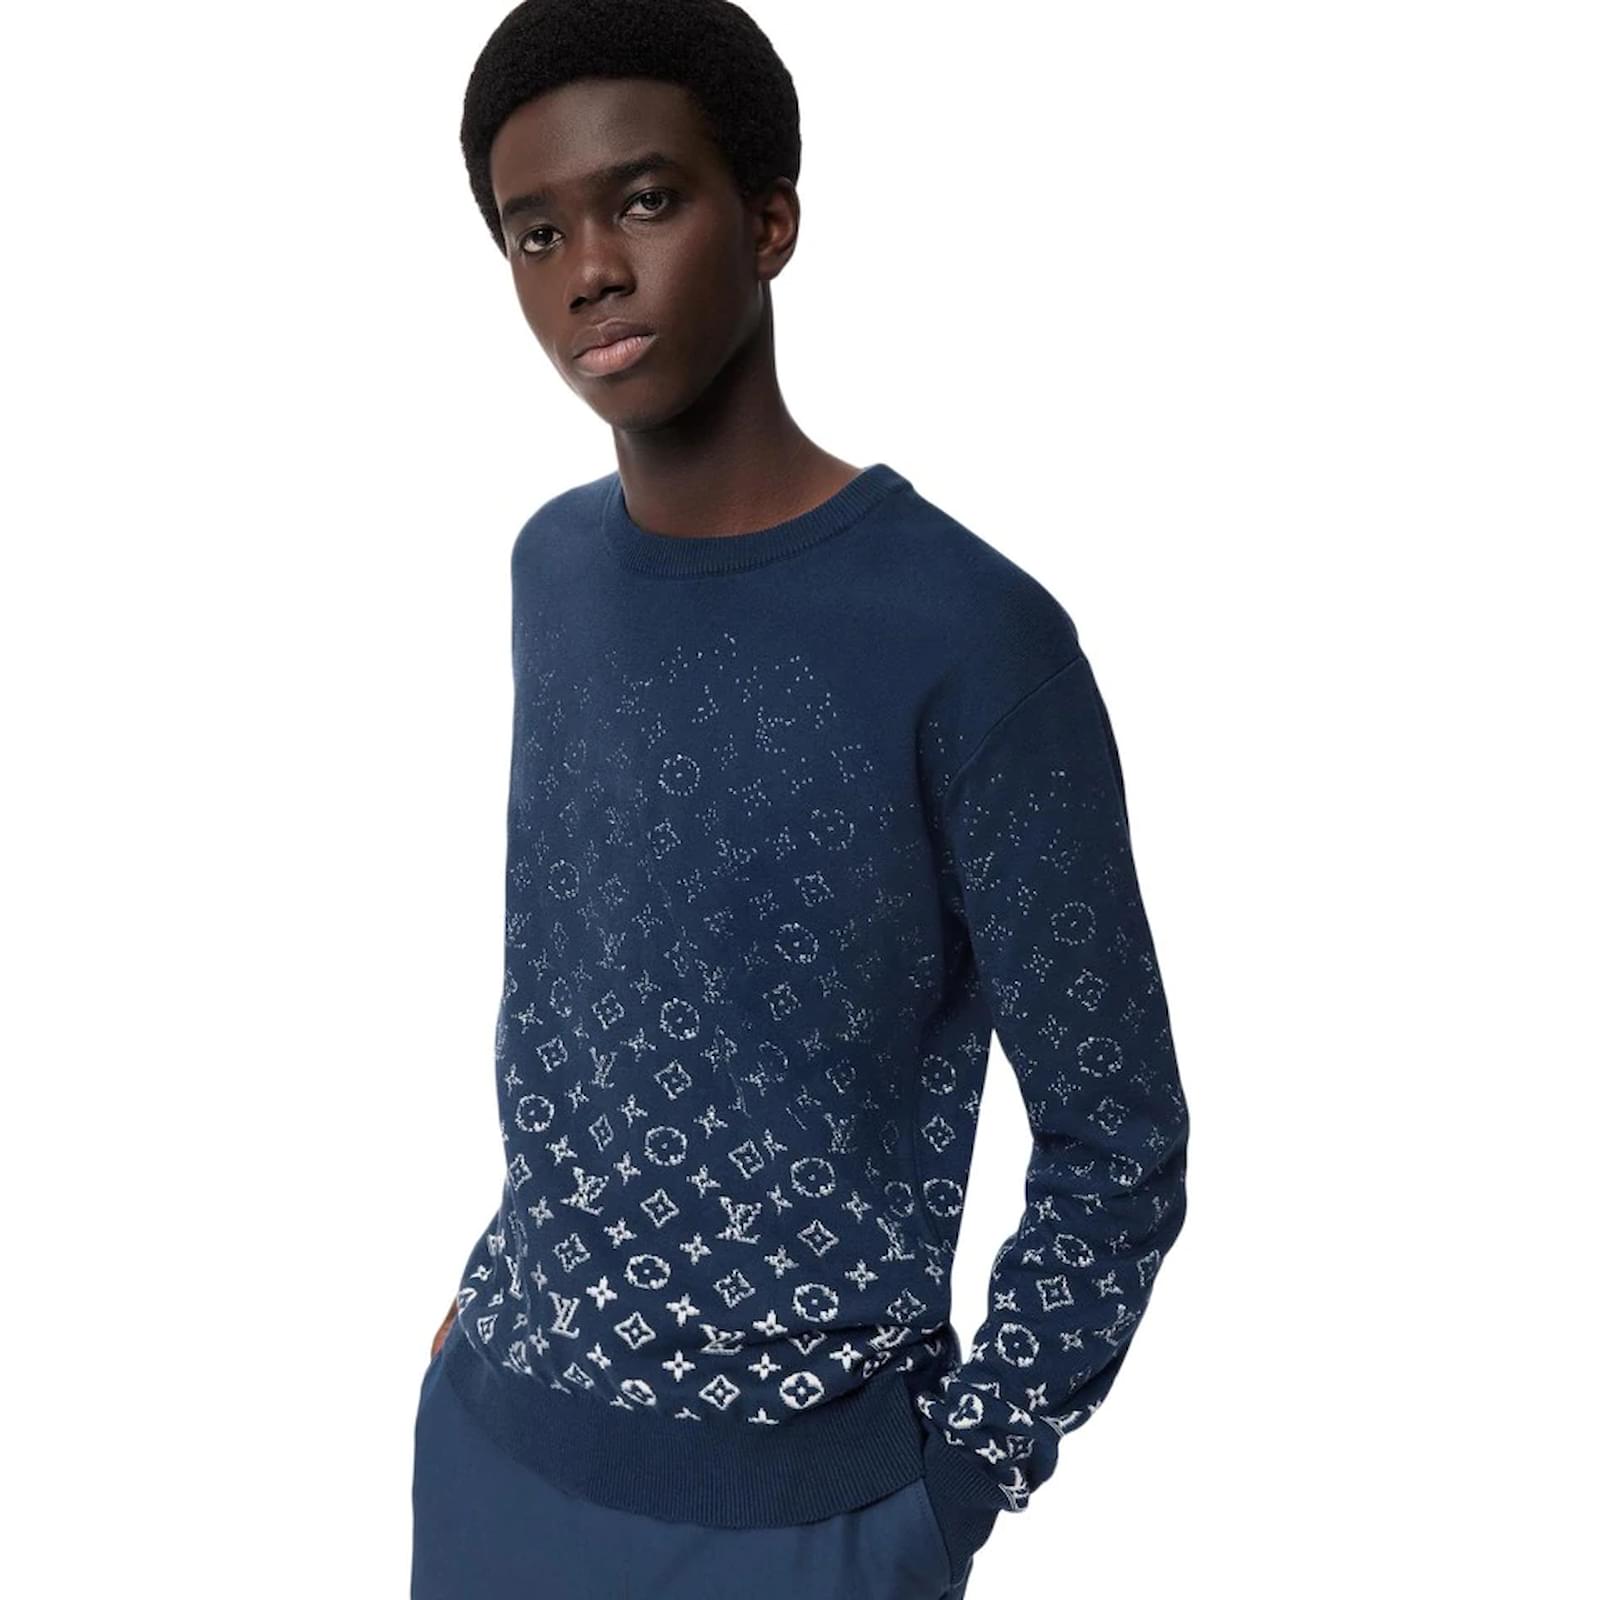 louis vuitton blue monogram sweater